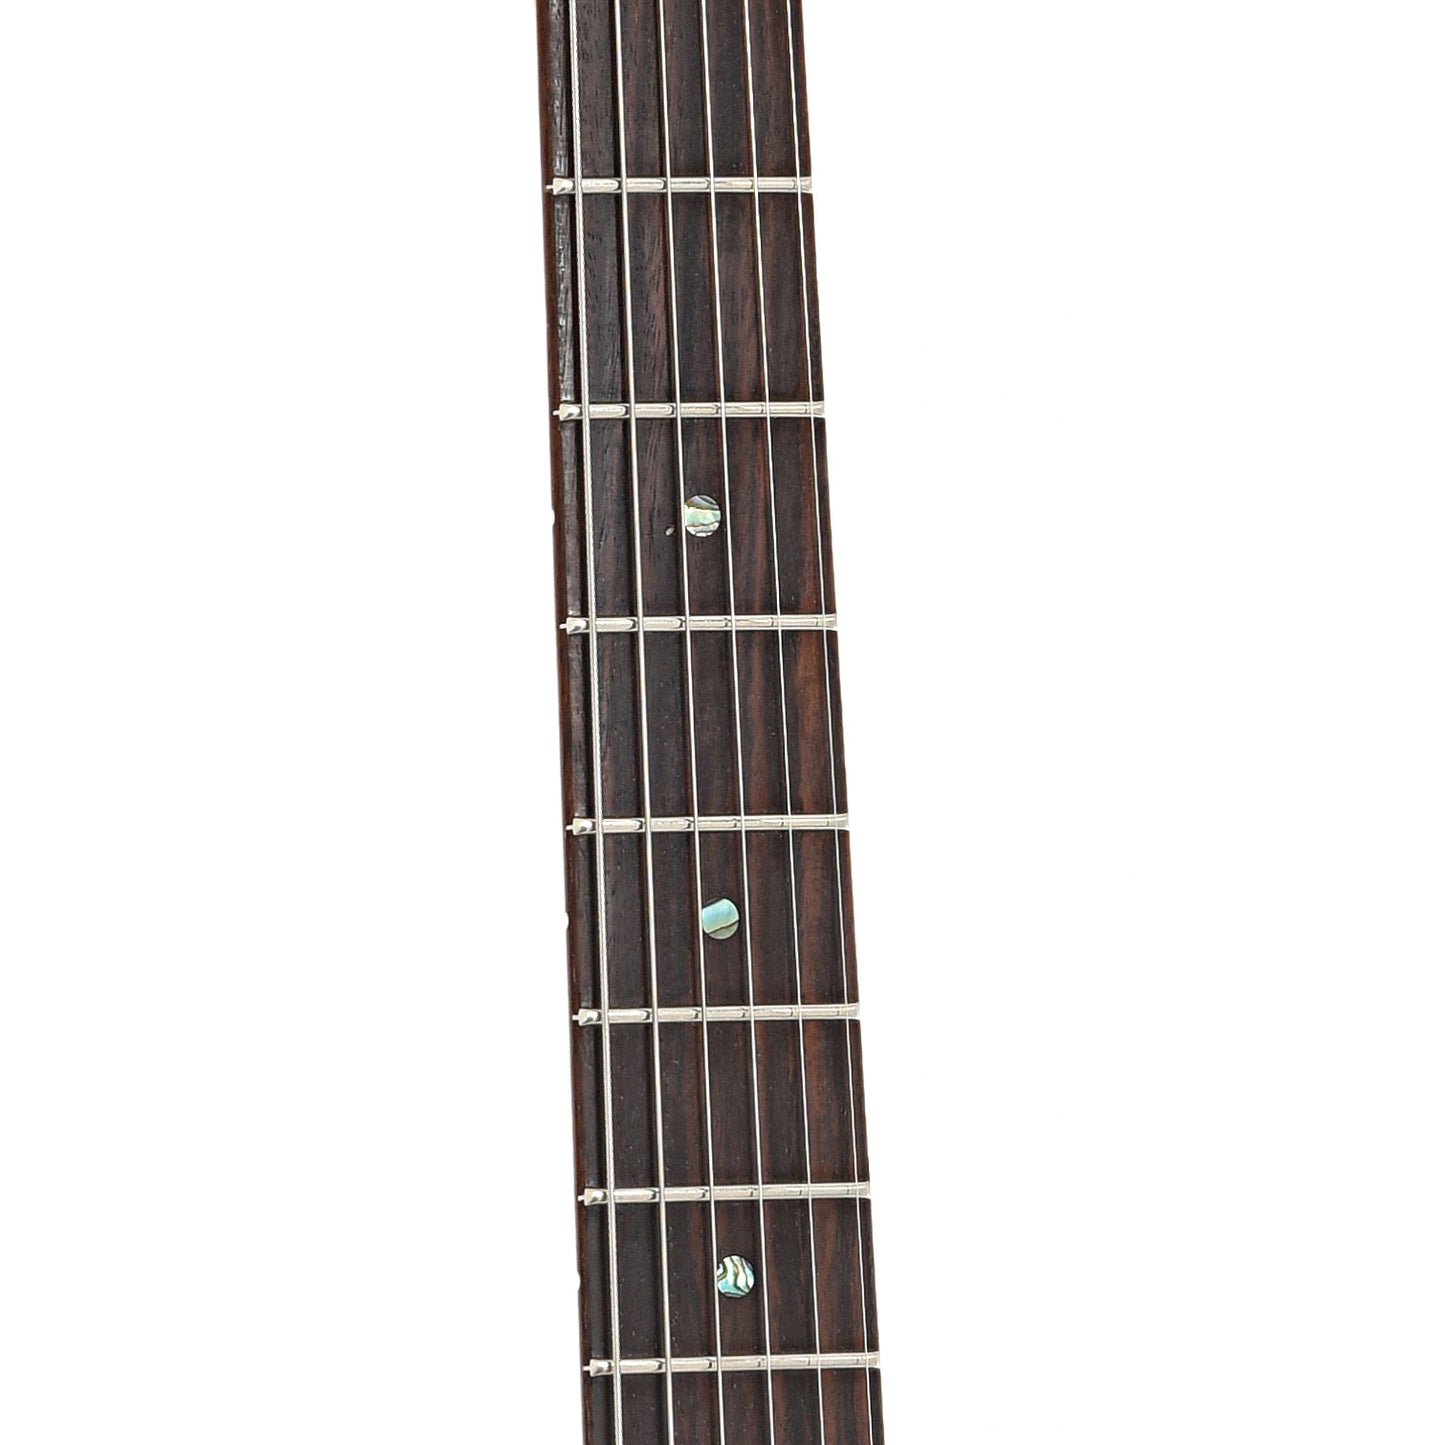 Fretboard of Fender American Deluxe Telecaster (1999)